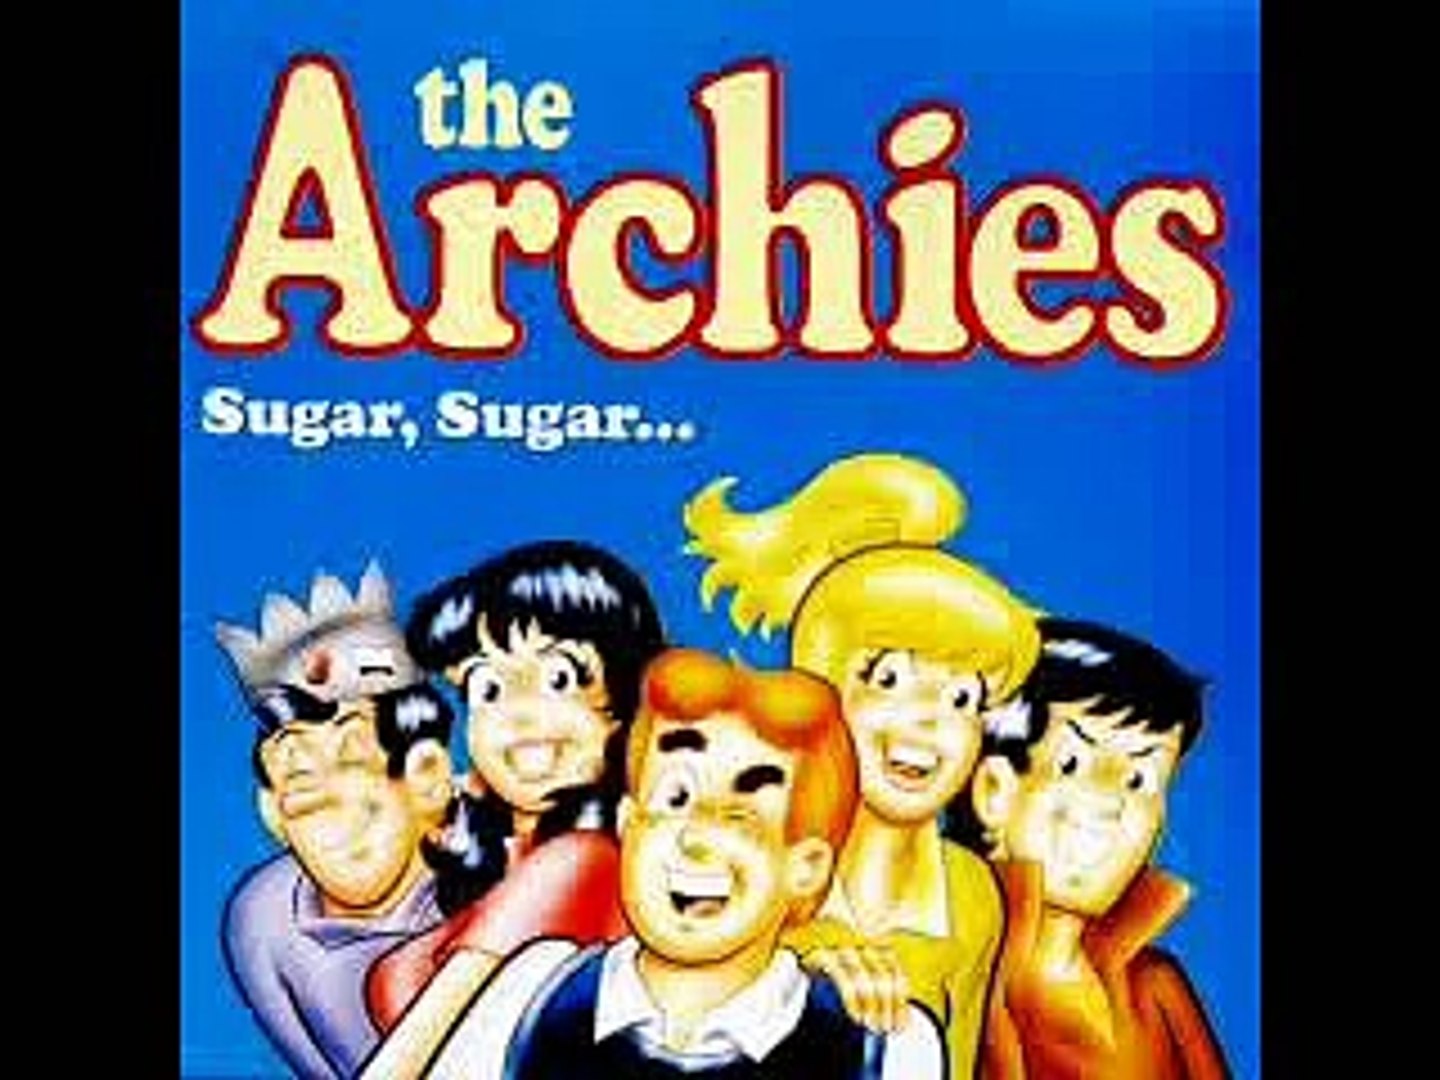 Sugar Sugar - The Archies - video Dailymotion